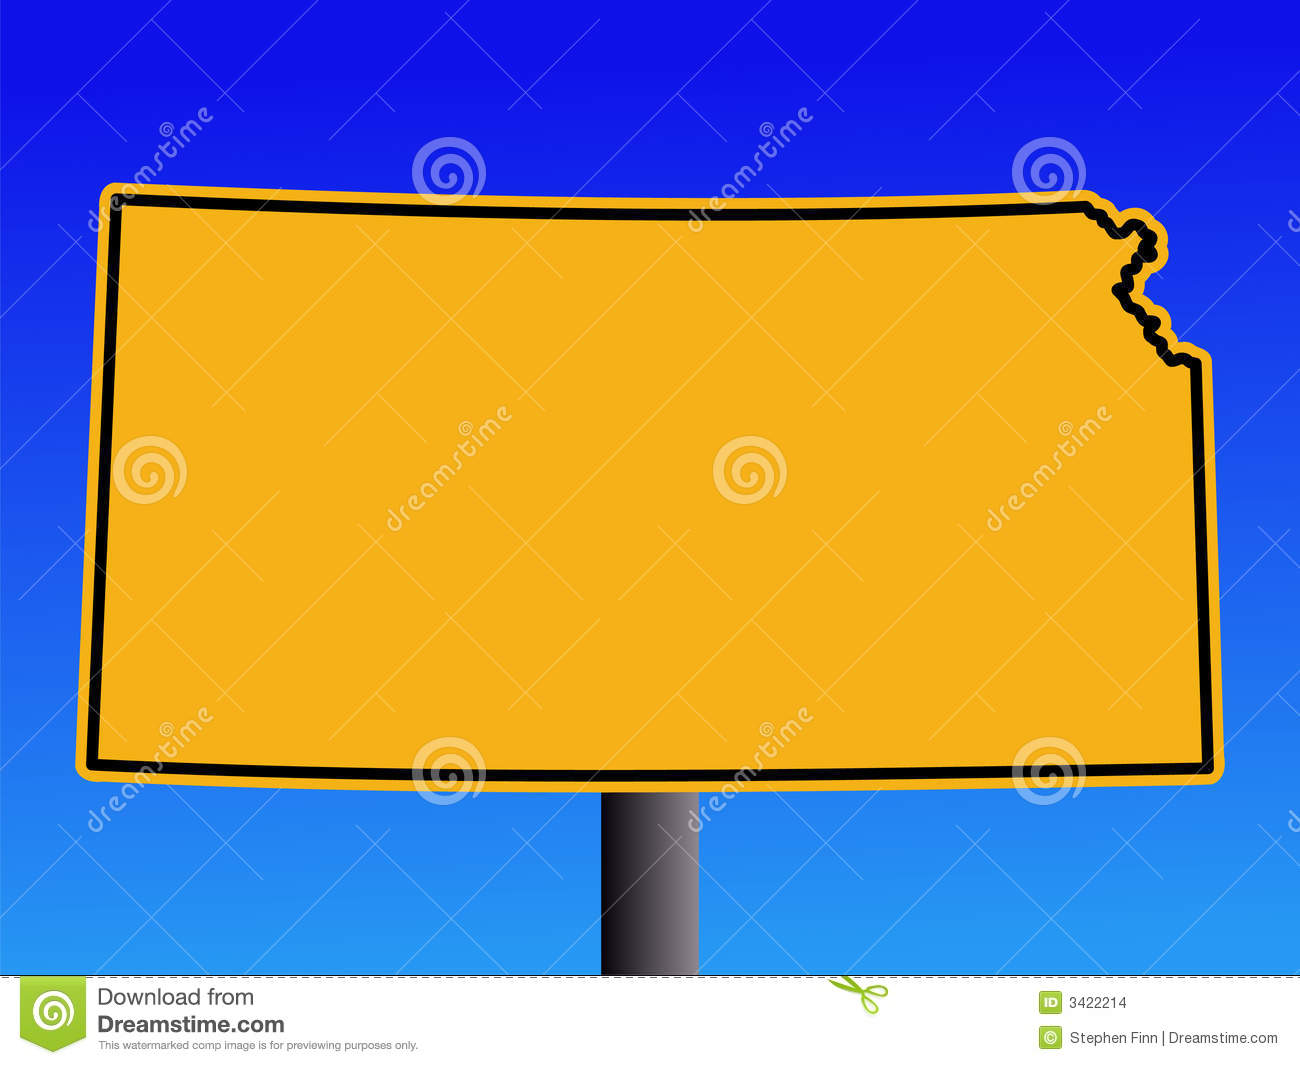 Warning Sign In Shape Of Kansas On Blue Illustration